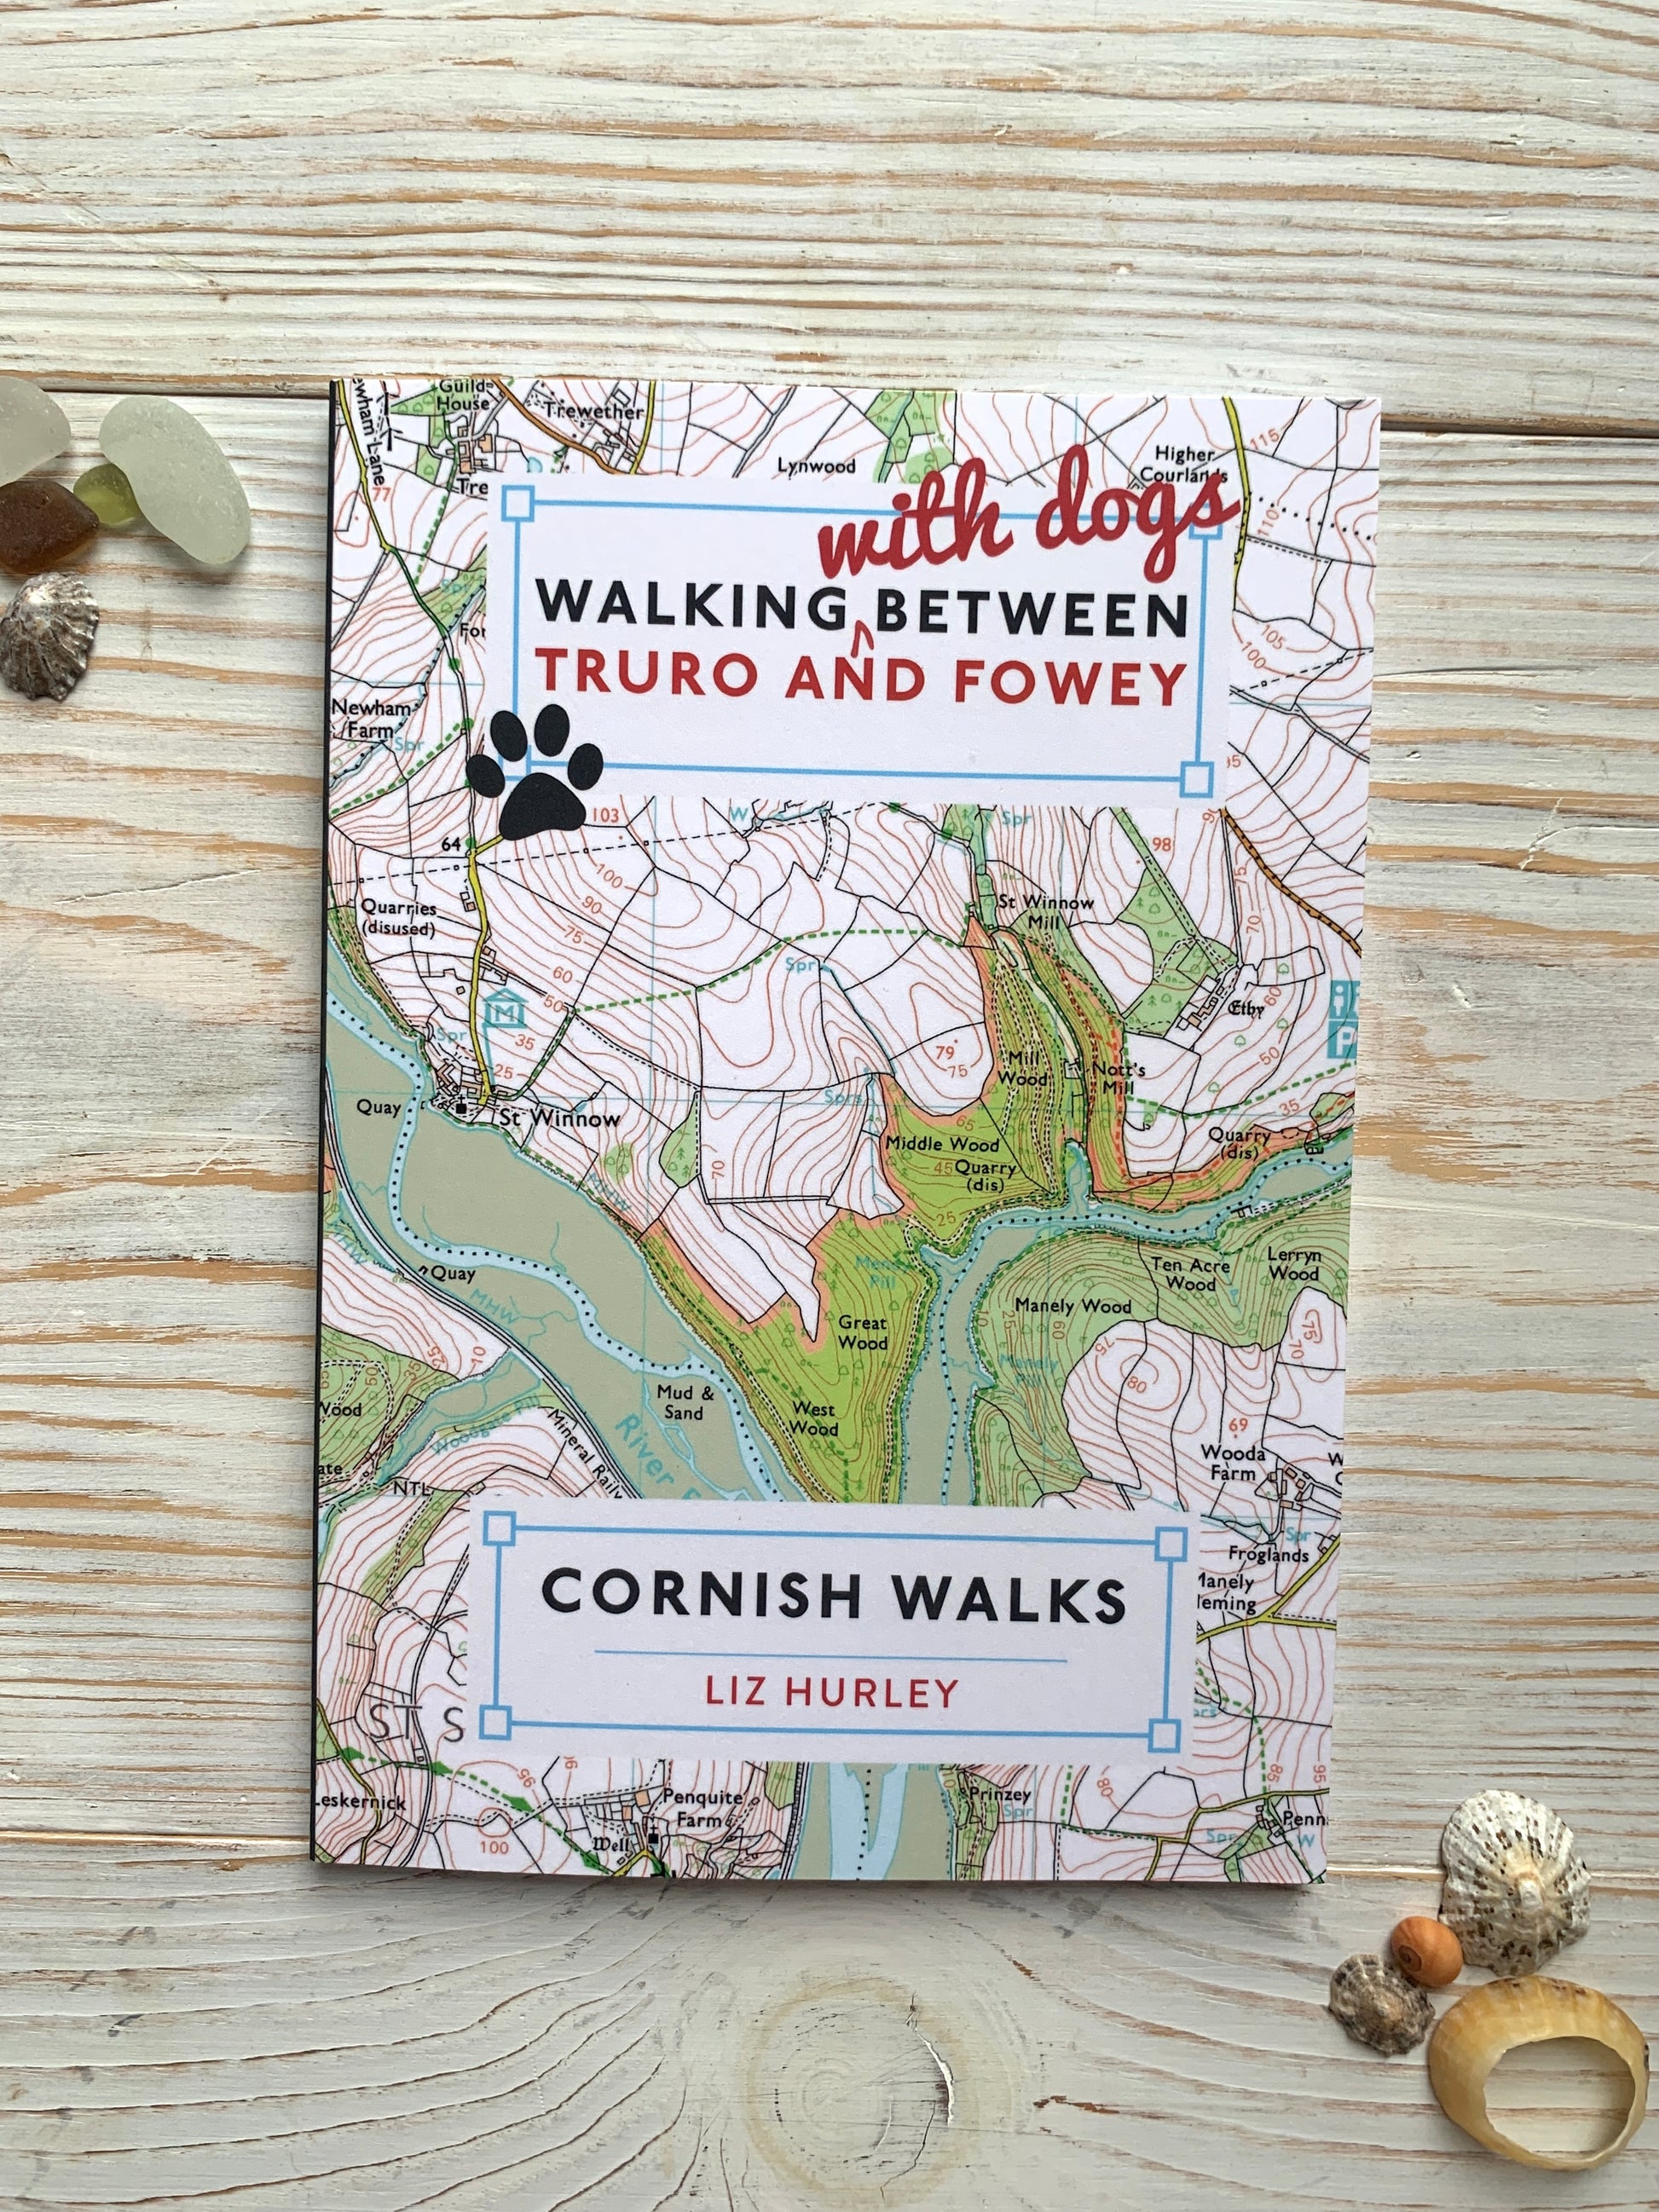 Walking with Dogs Fowey/Truro book